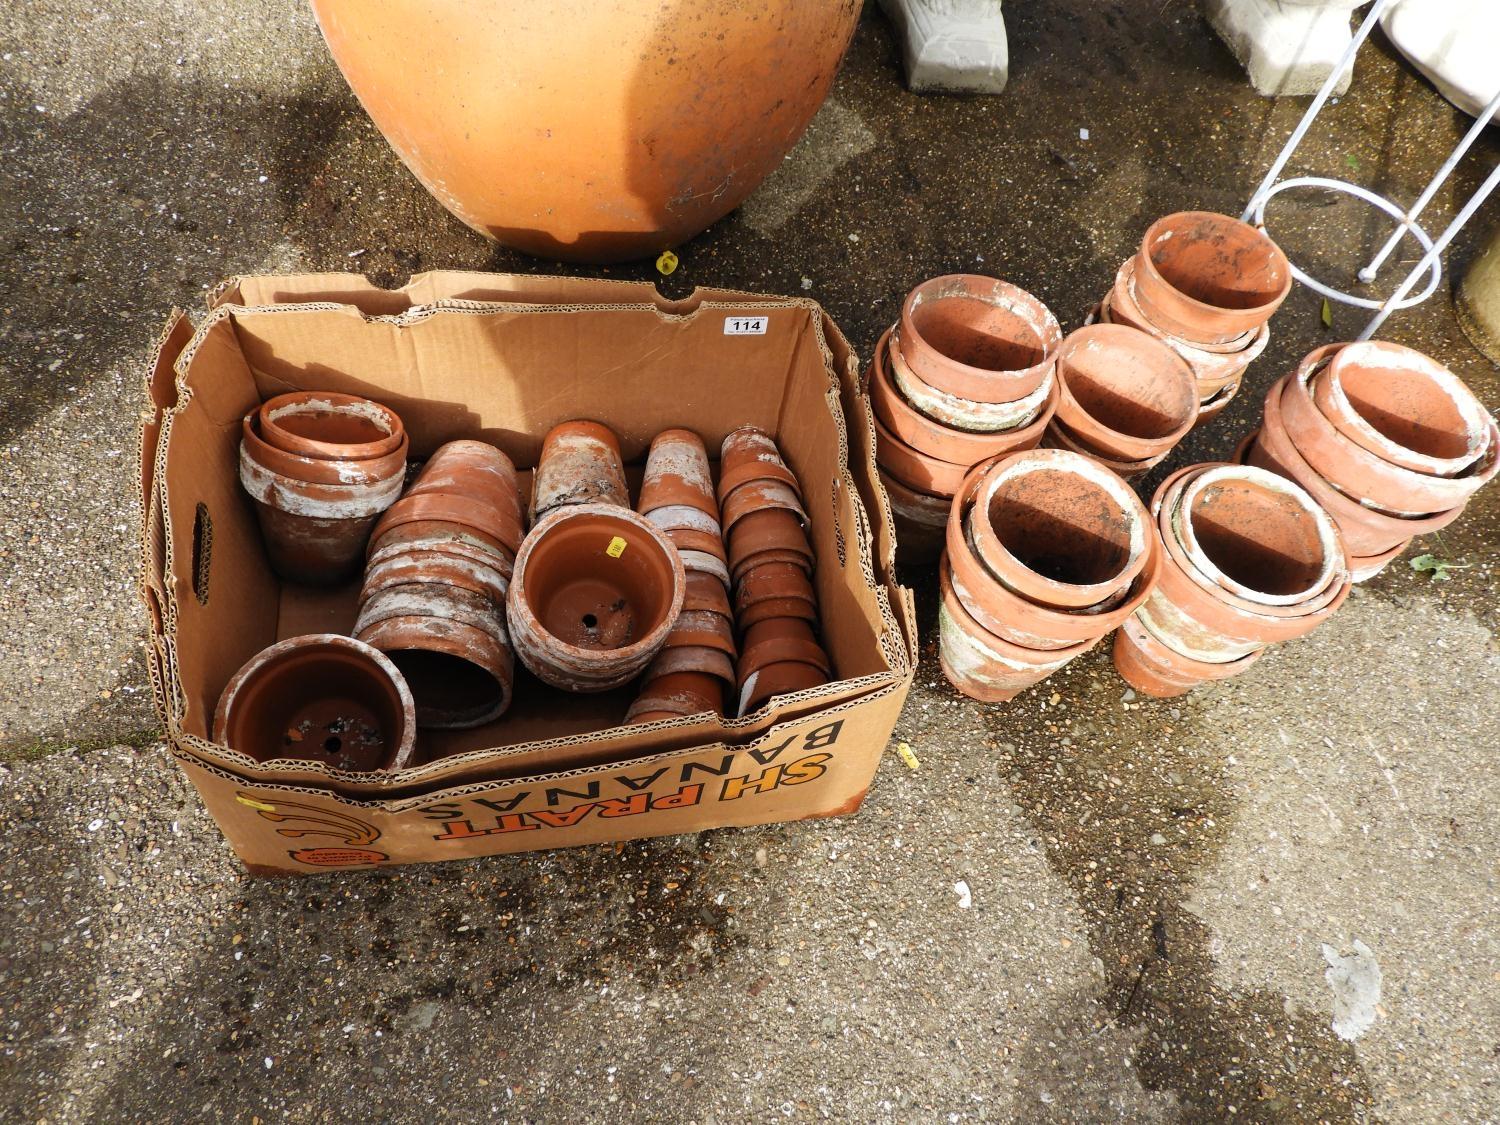 Quantity of Terracotta Plant Pots